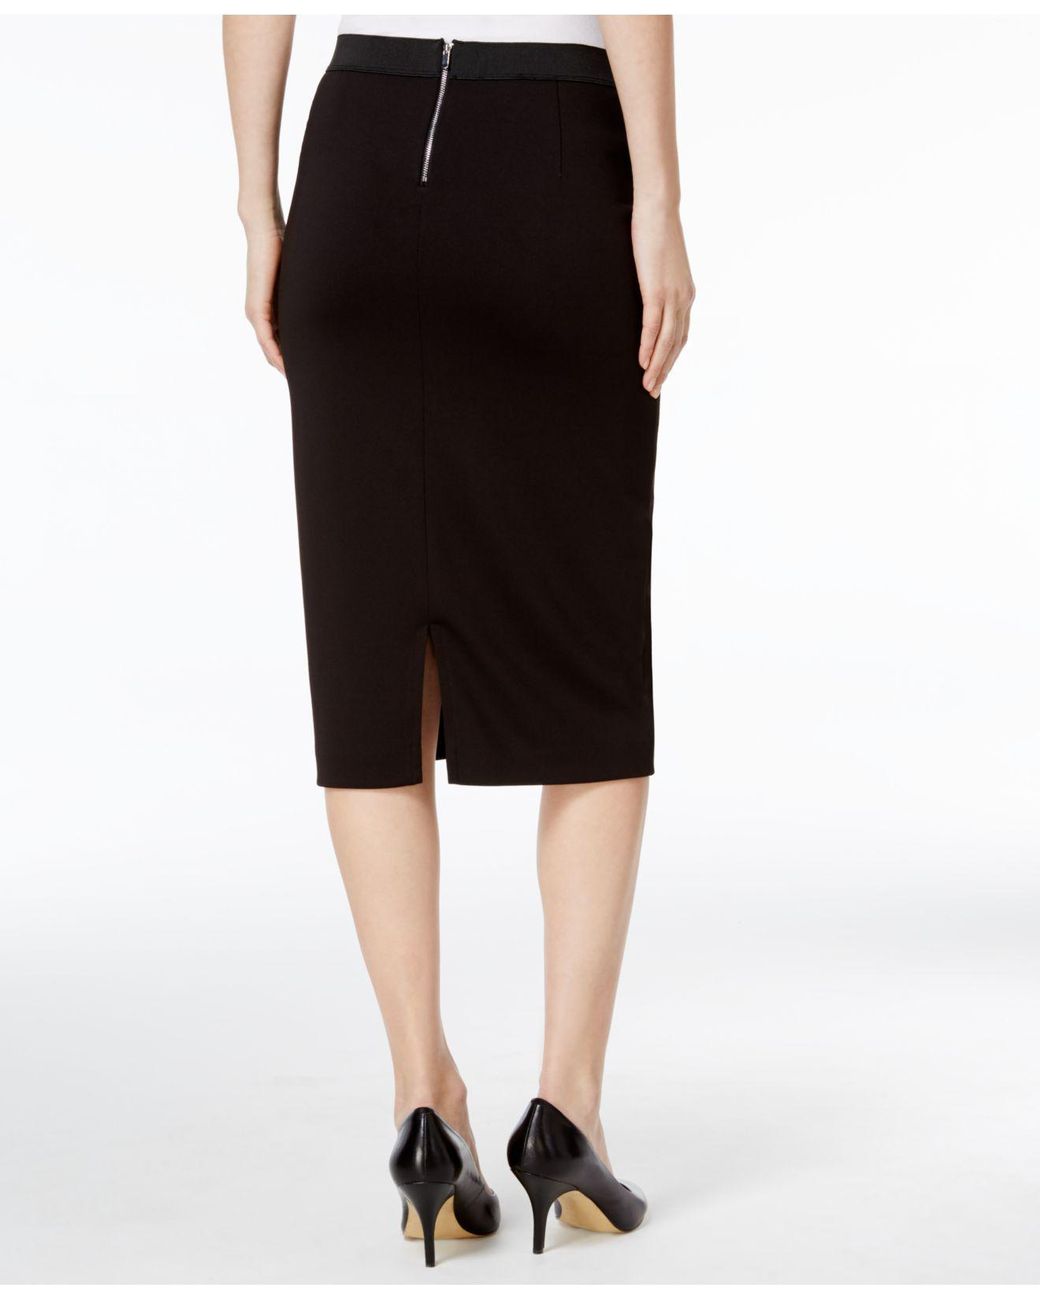 Alfani Women's Black Below-knee Pencil Skirt